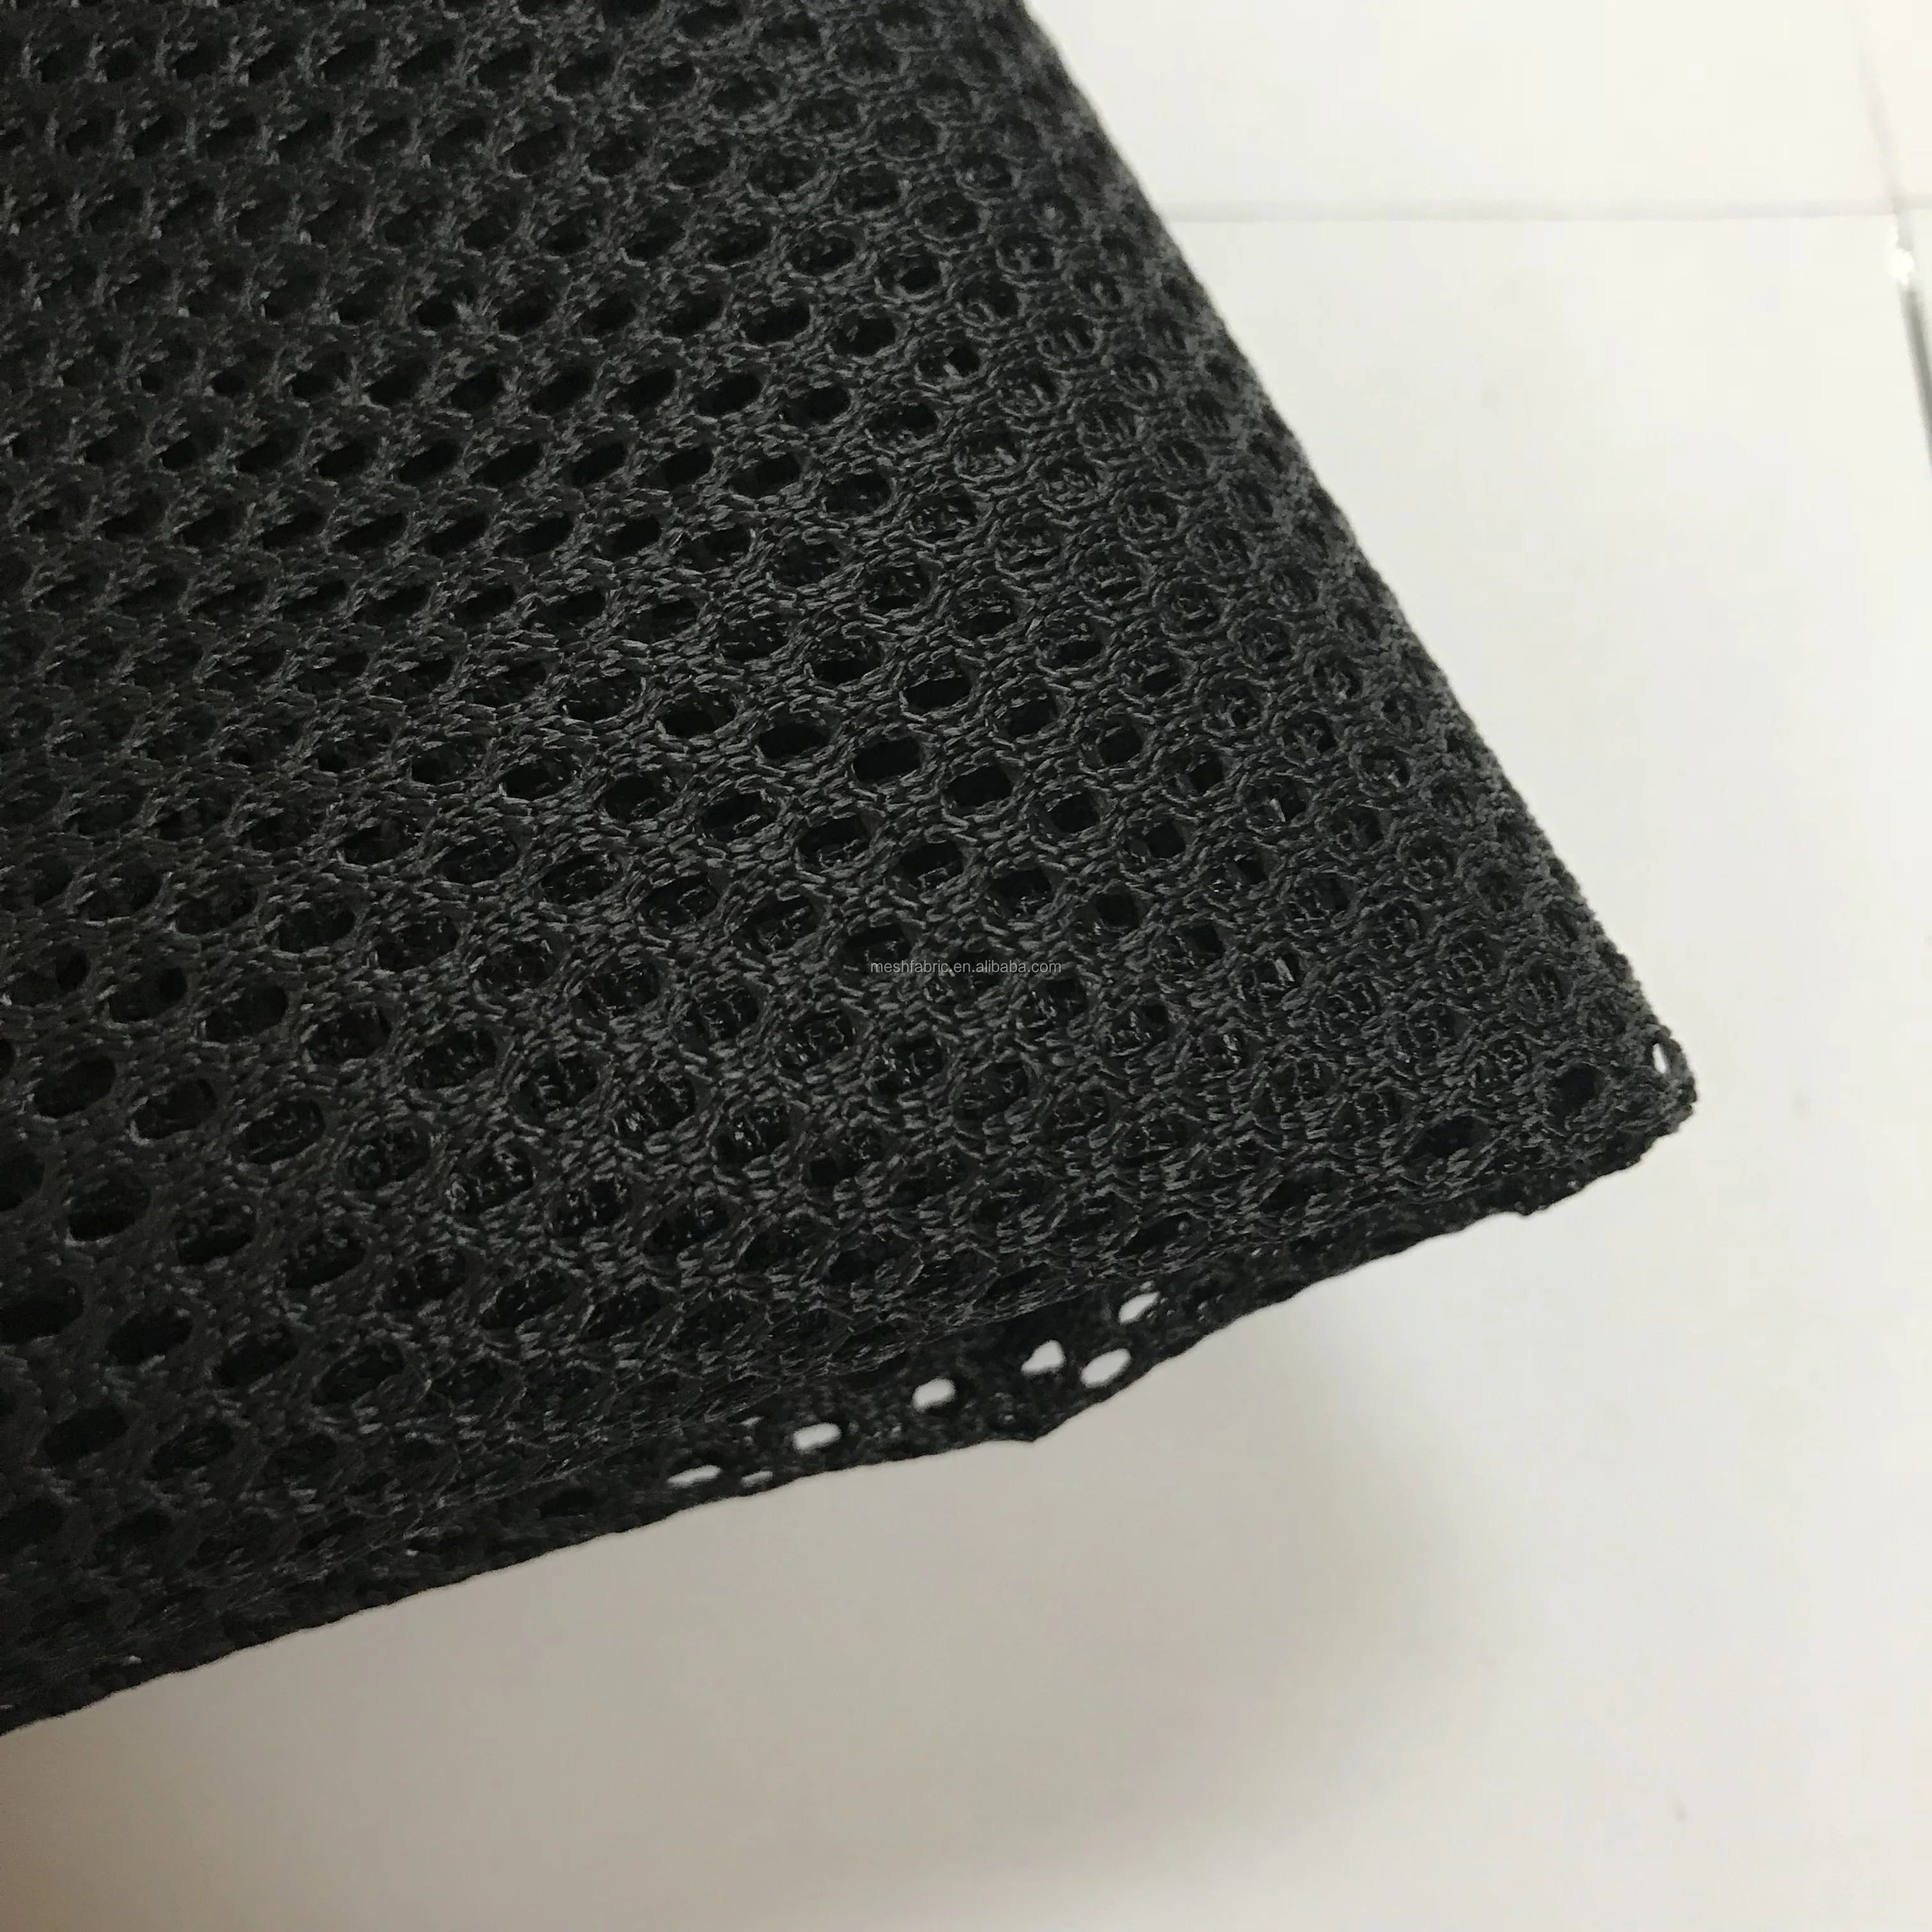 100 polyester mesh fabric